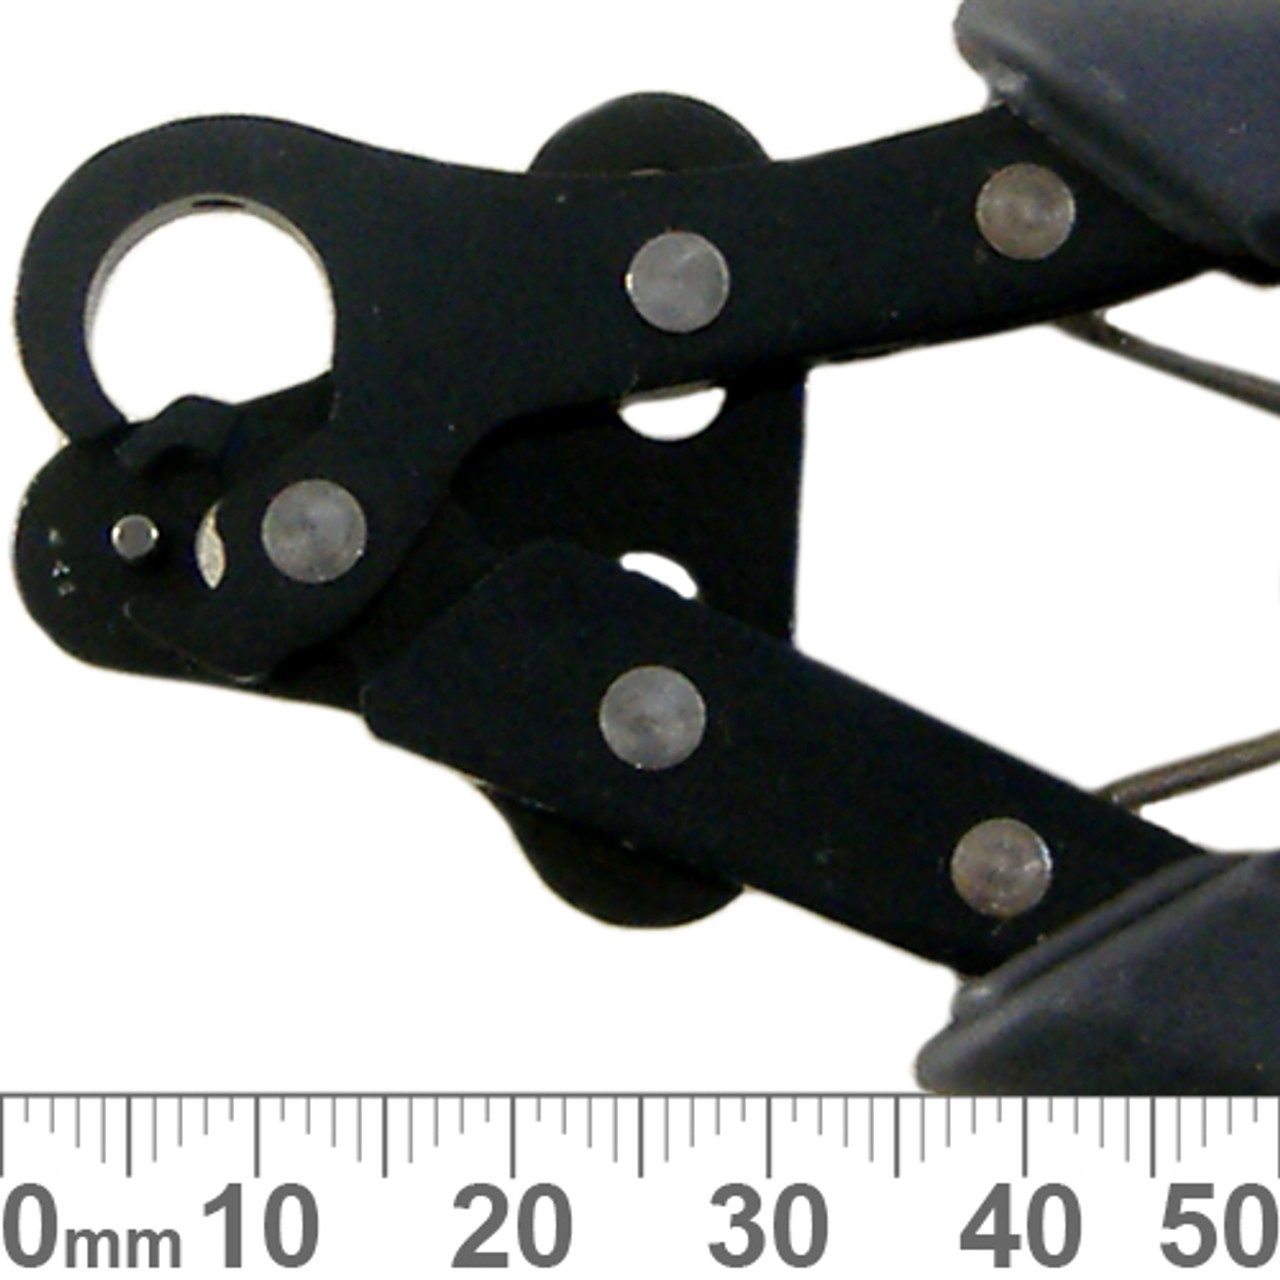 The 1-Step Looper - 1.5 mm Loops for 24-18 Gauge Wires